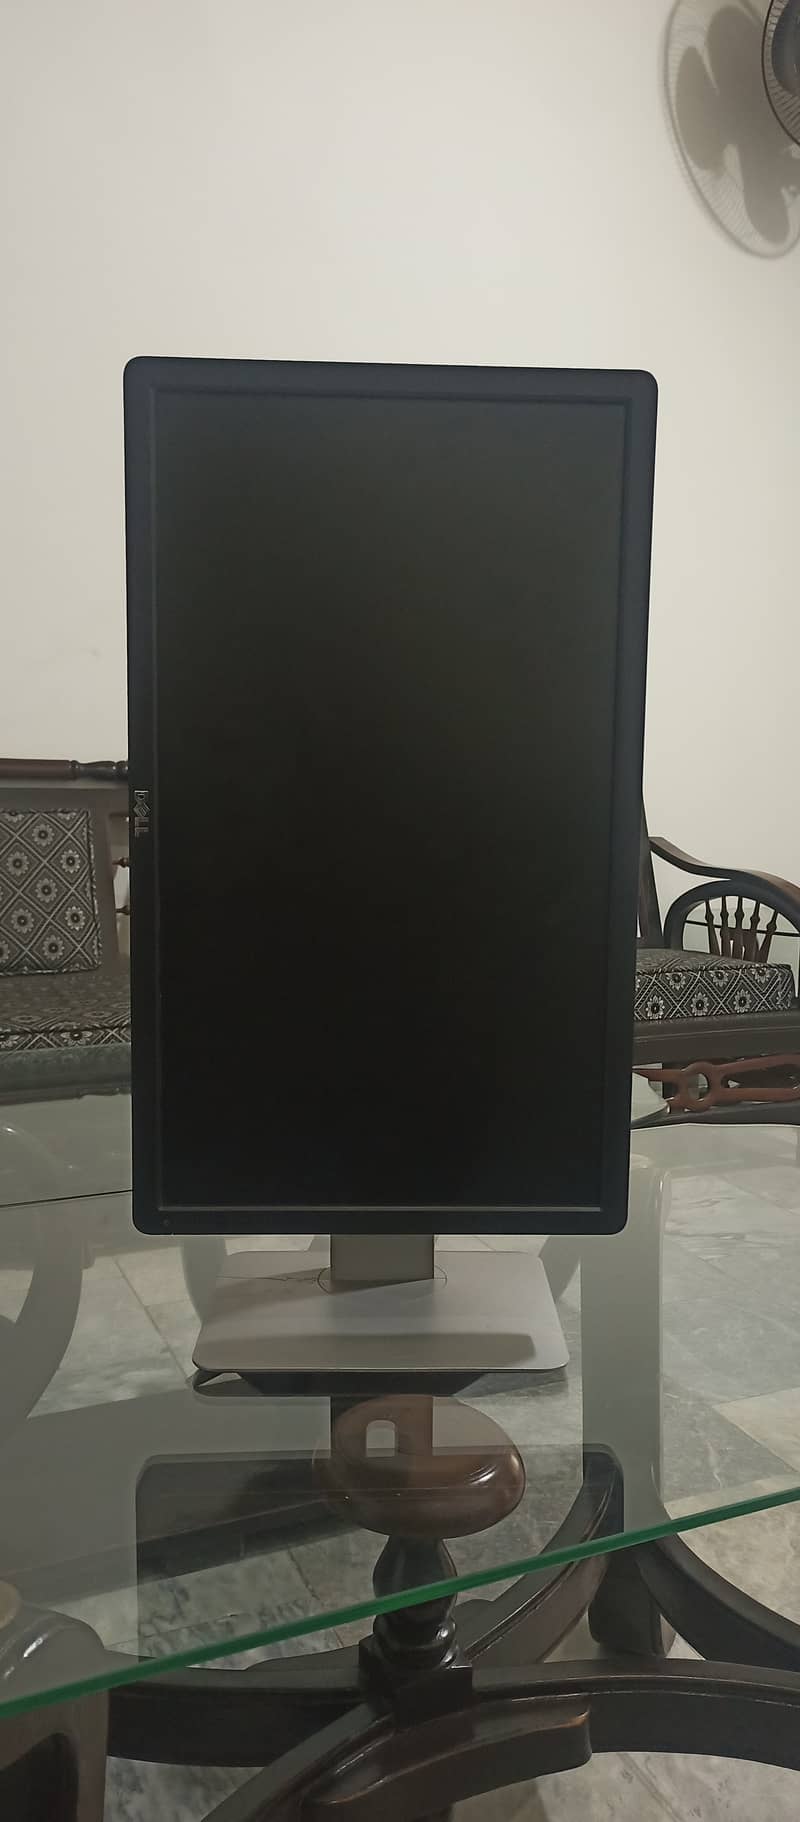 Dell P2212Hb - 22" Widescreen LED LCD Monitor Grade A 2